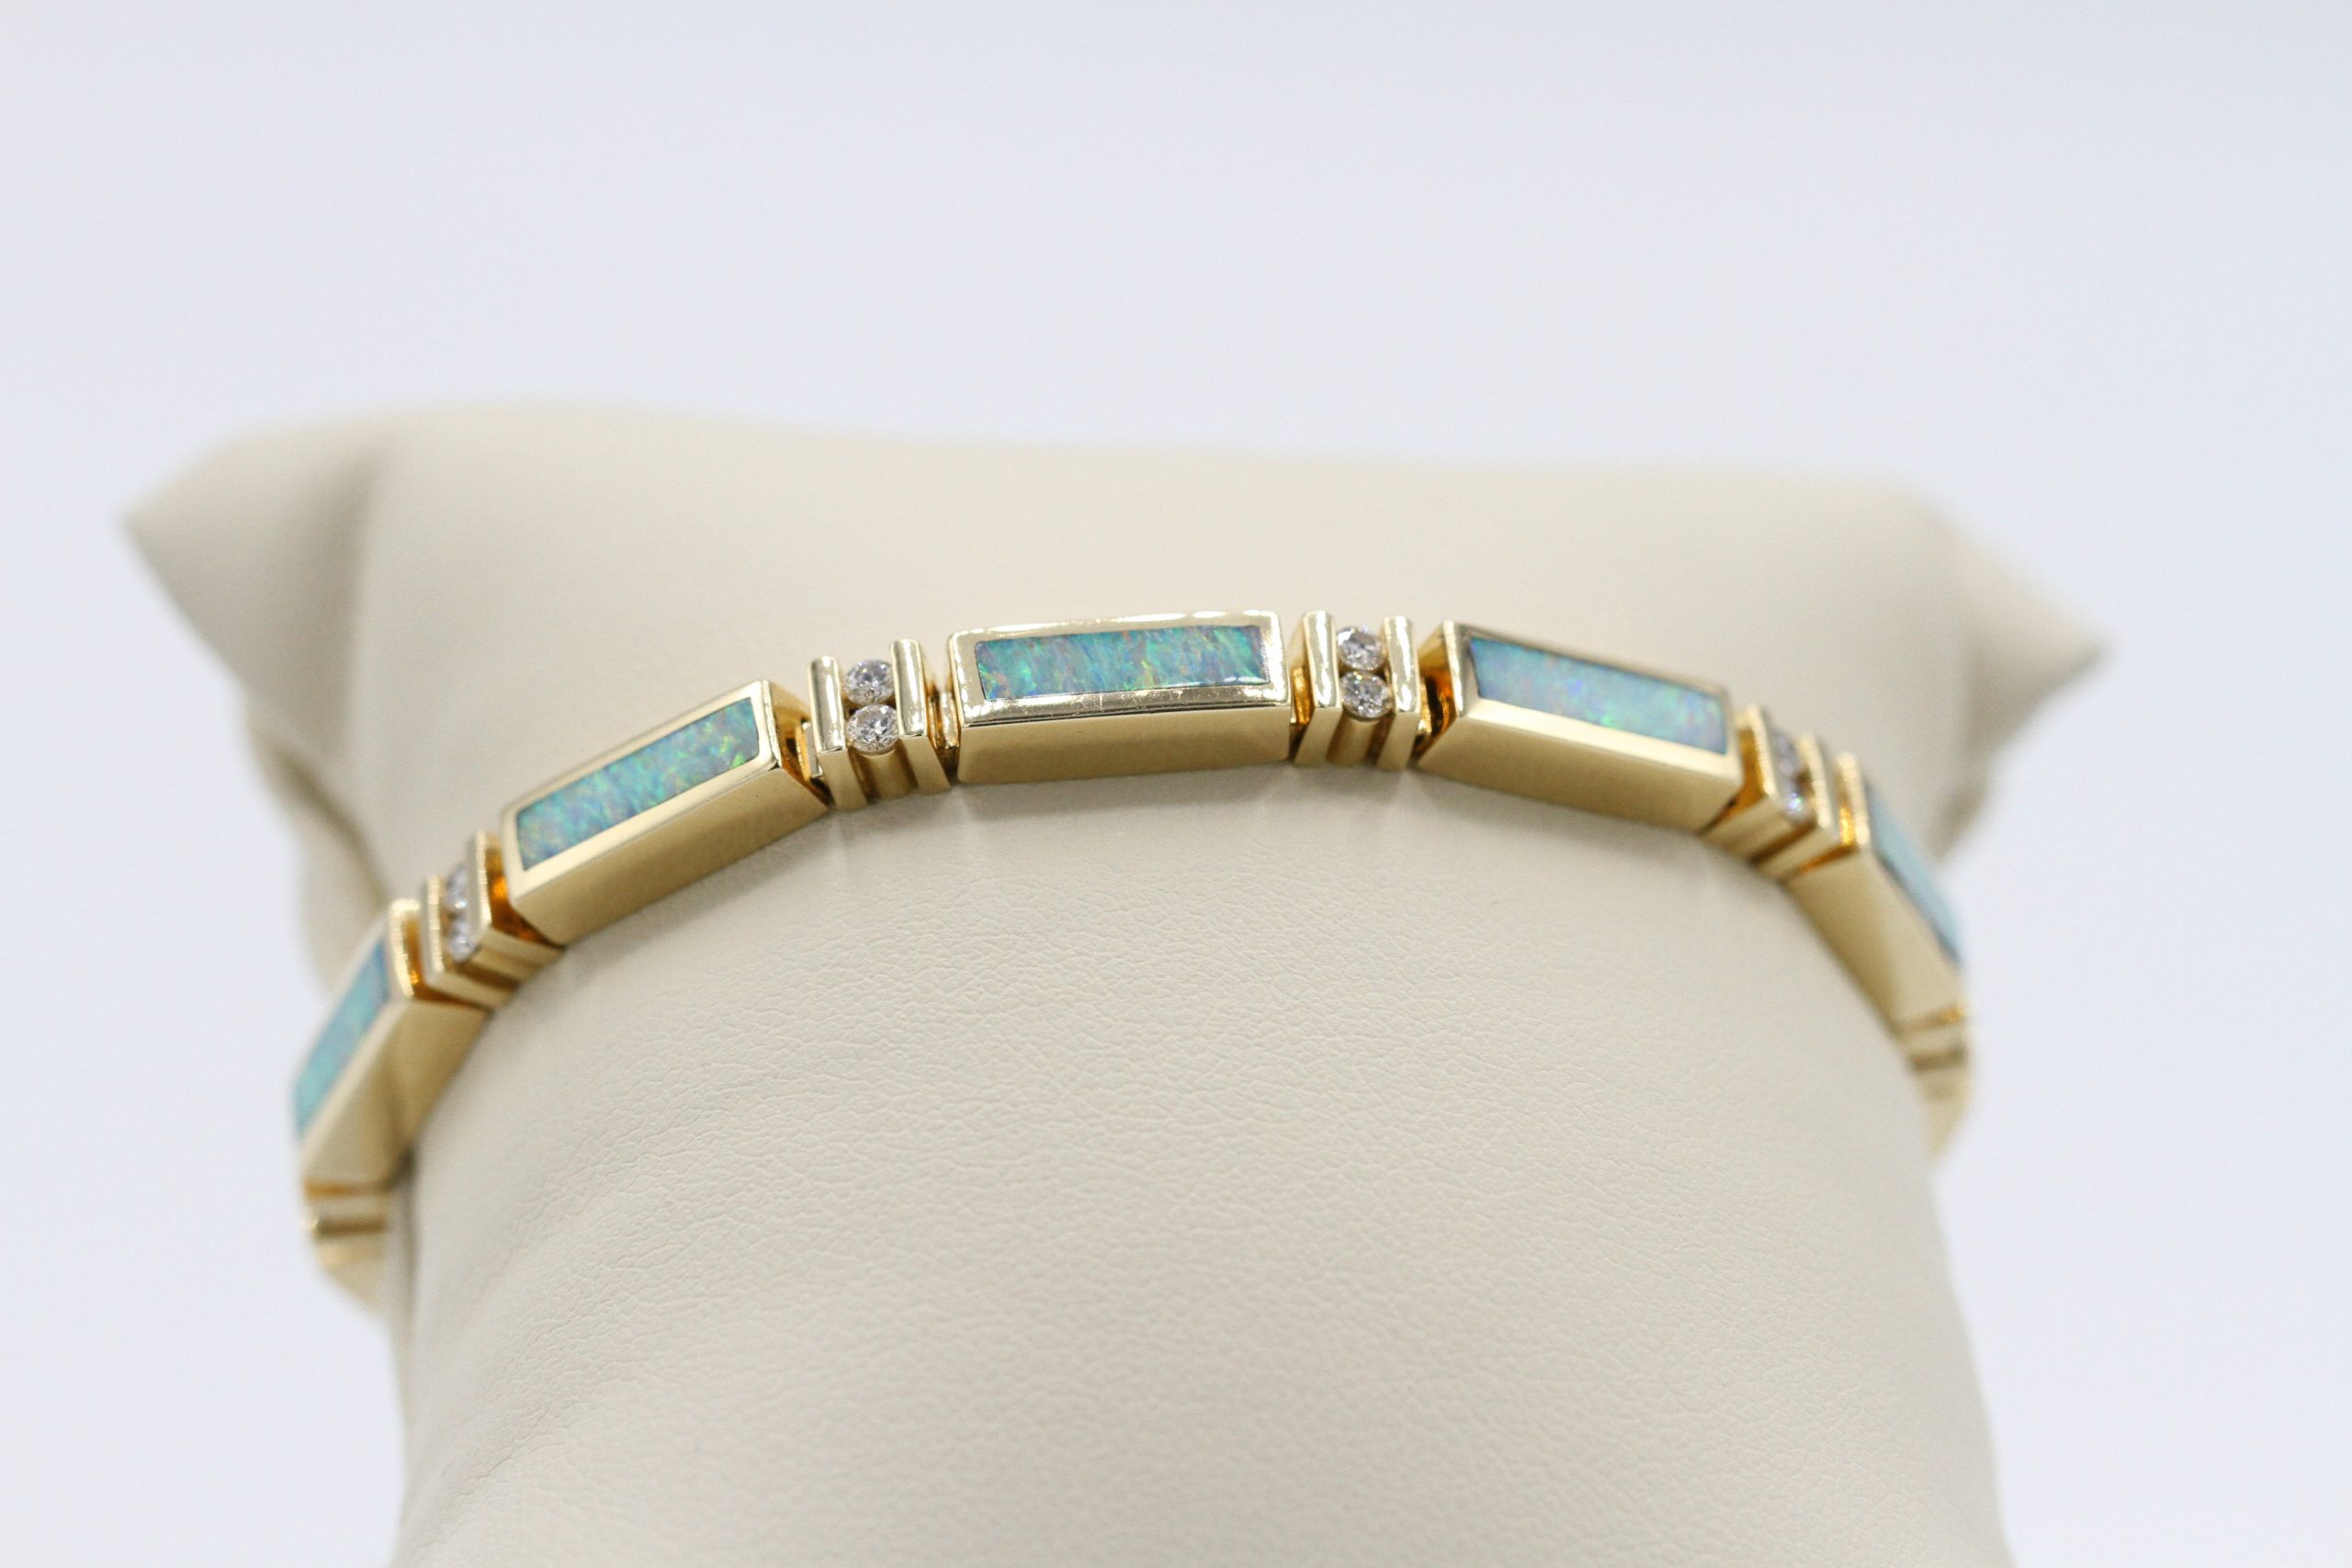 A gold bracelet with inlaid diamonds